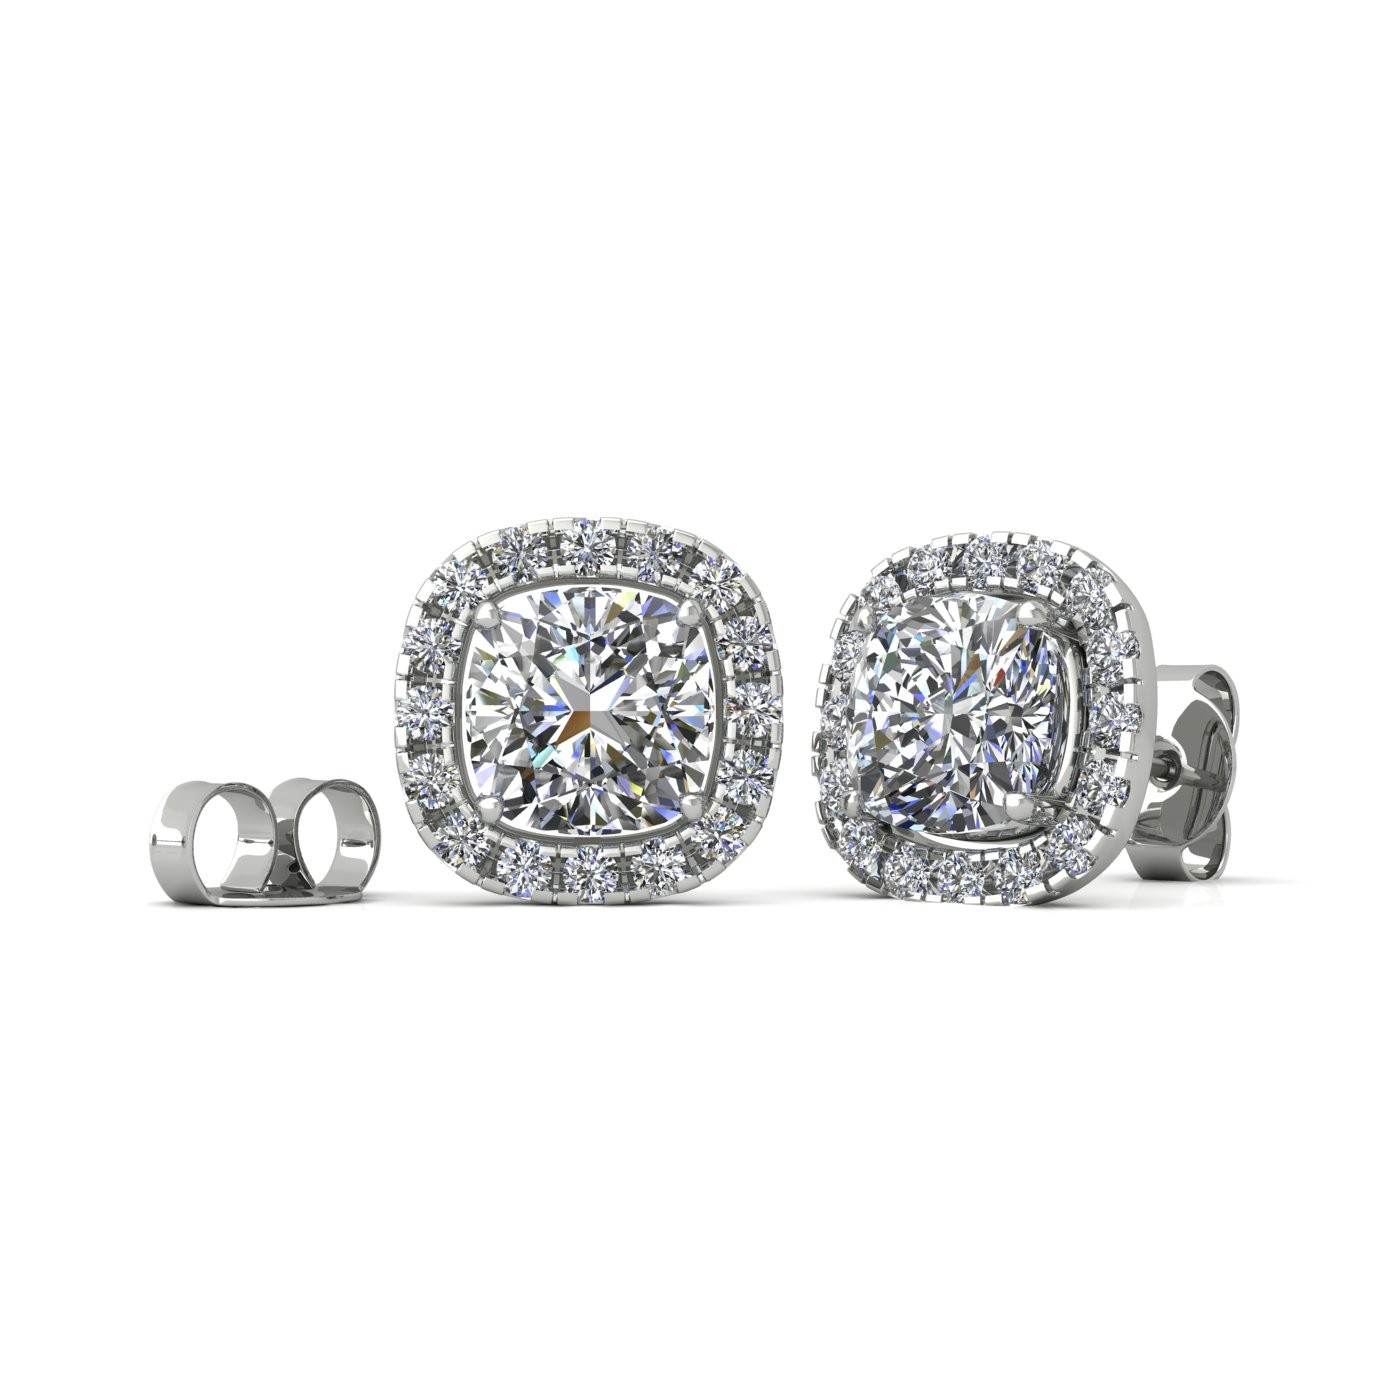 18k white gold  0,7 ct each (1,4 tcw) 4 prongs cushion shape diamond earrings with diamond pavÉ set halo